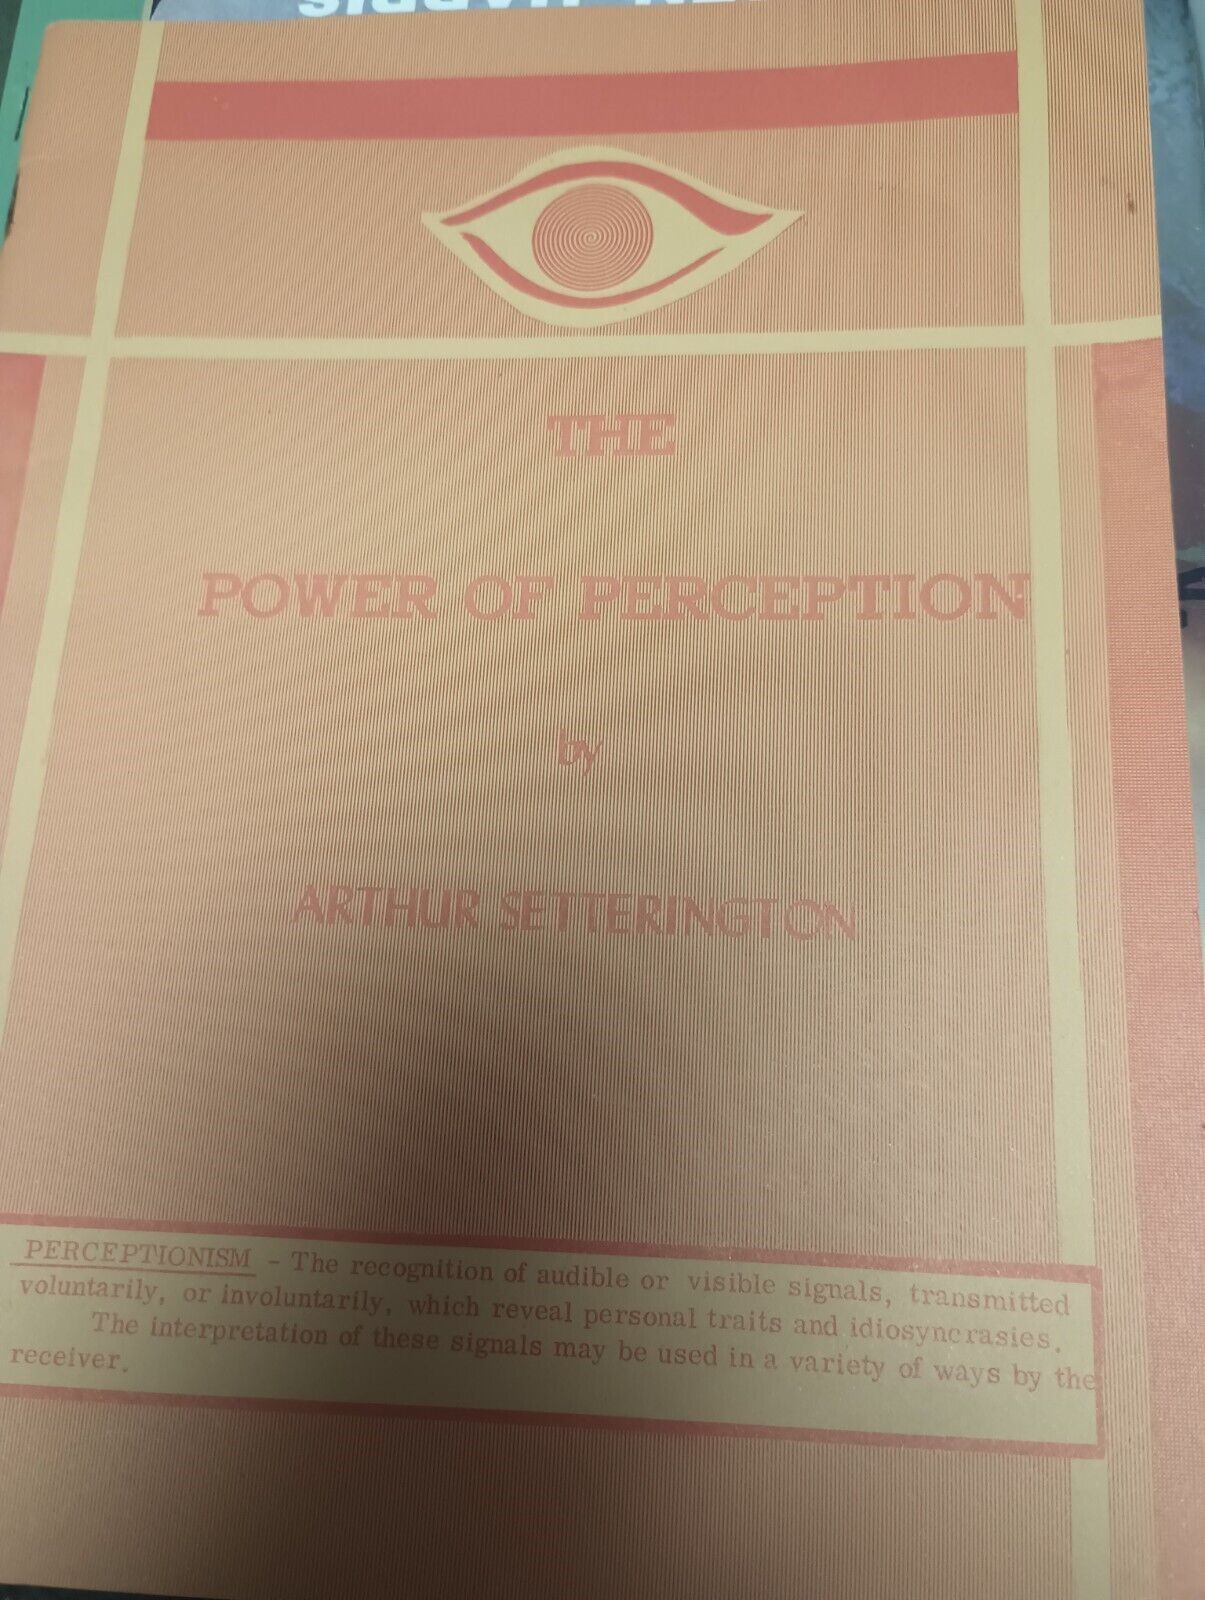 The Power of Perception by Arthur Setterington - Book